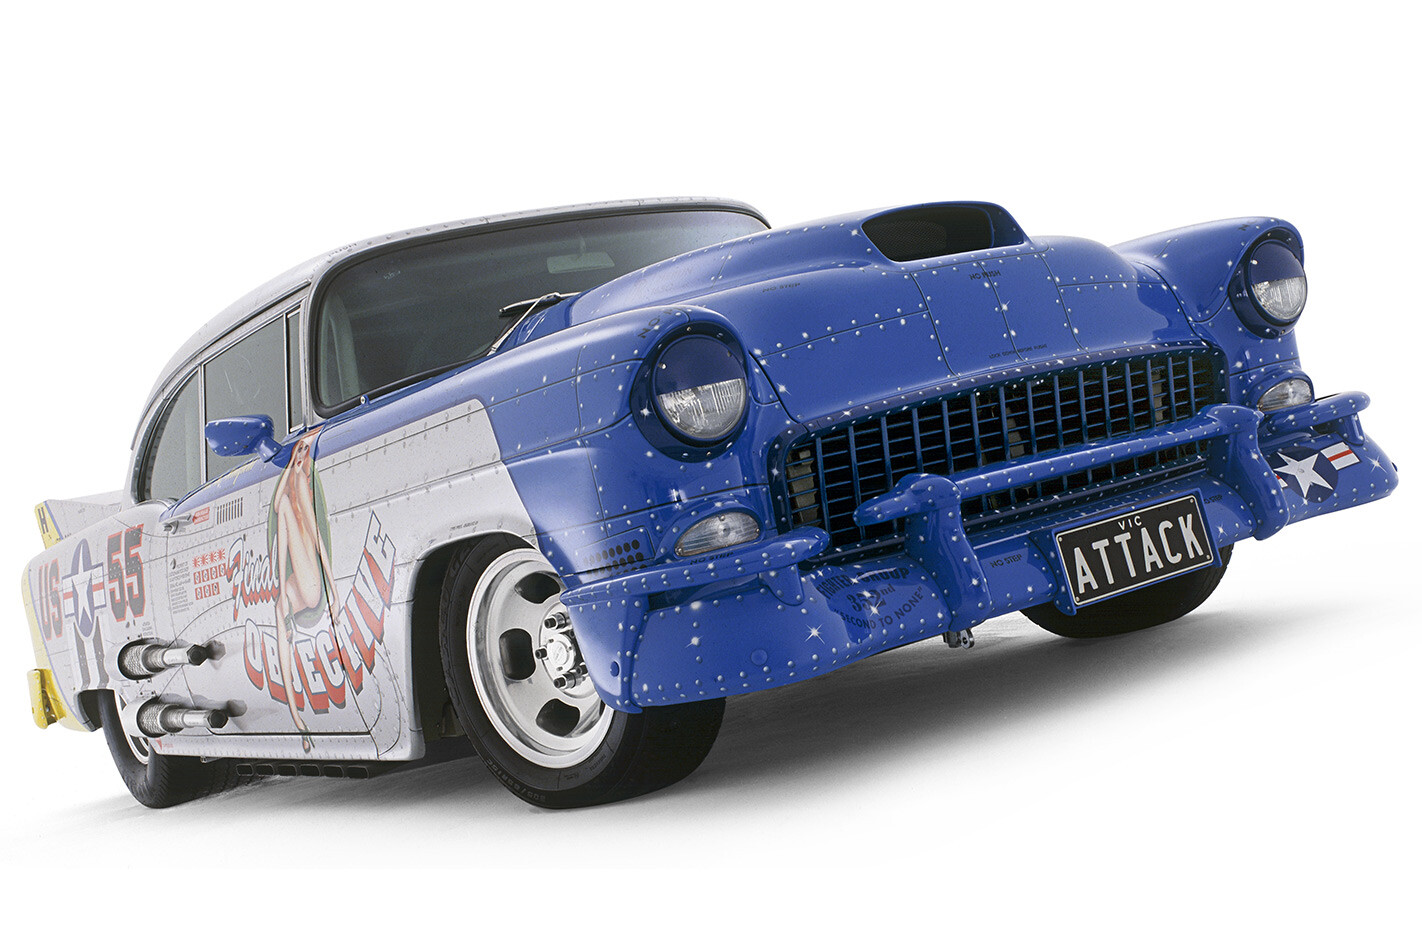 1955 Chevrolet Massive Attack front